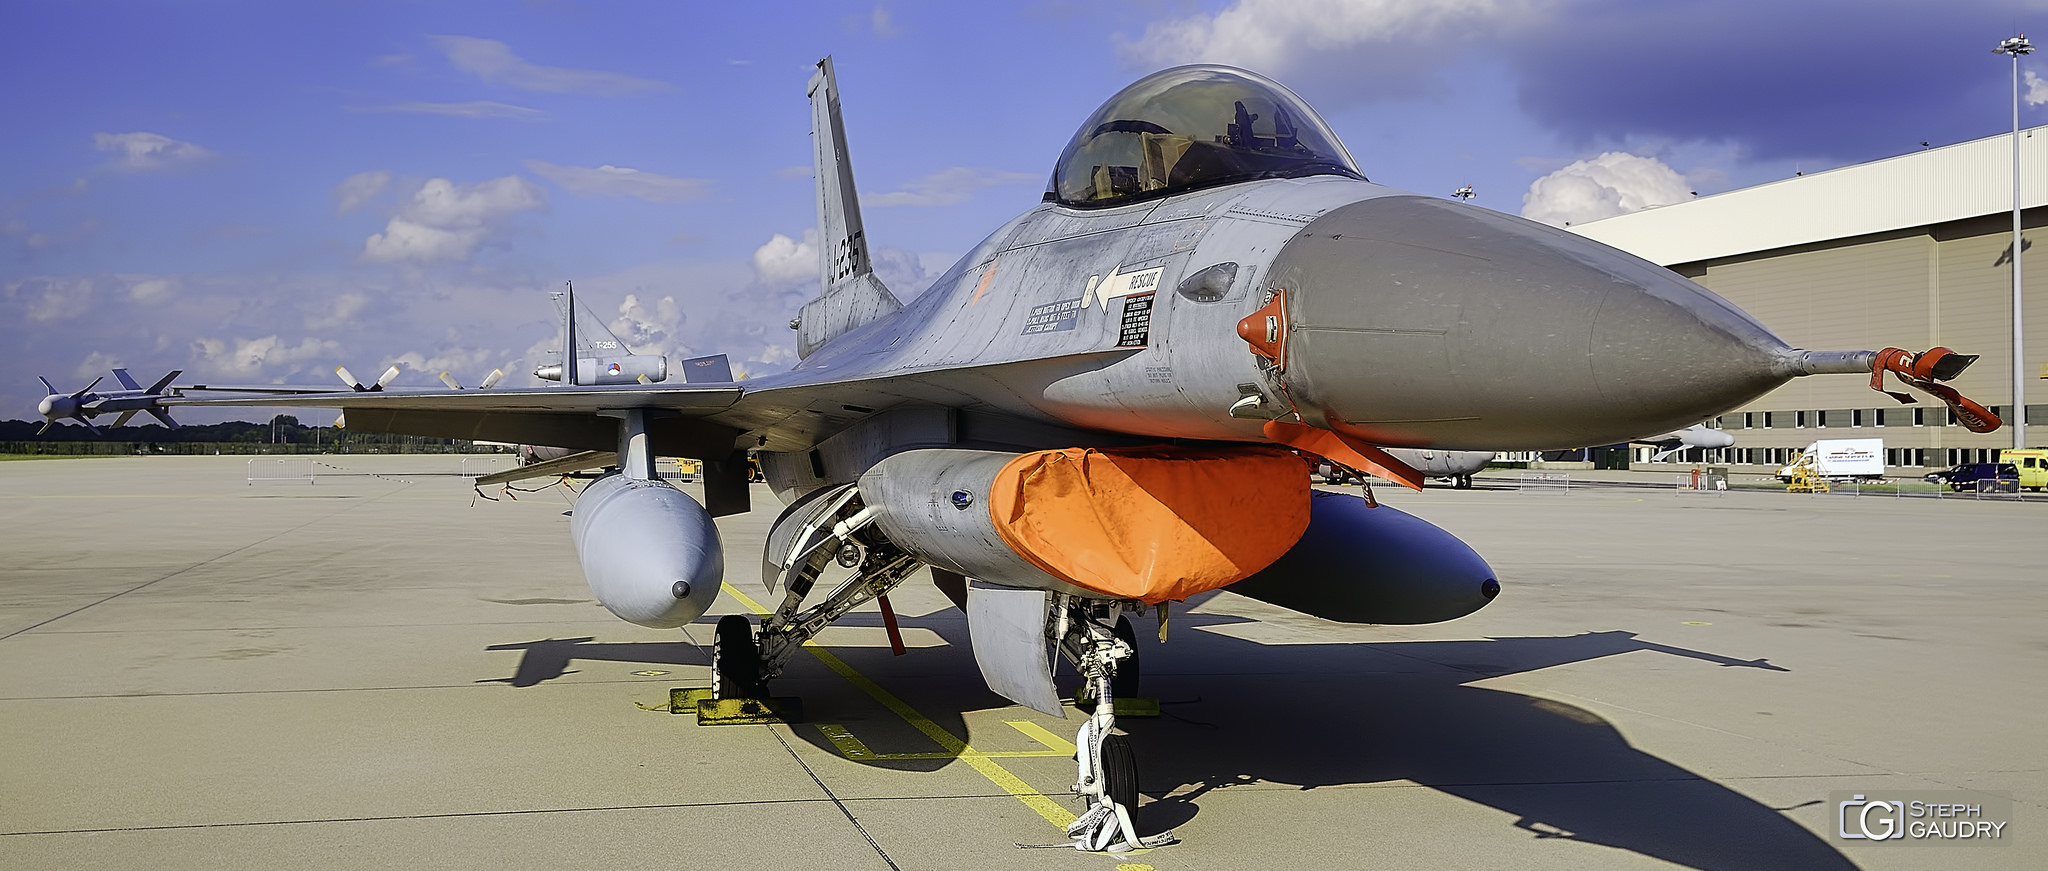 EHEH - F-16 Fighting Falcon [Klik om de diavoorstelling te starten]